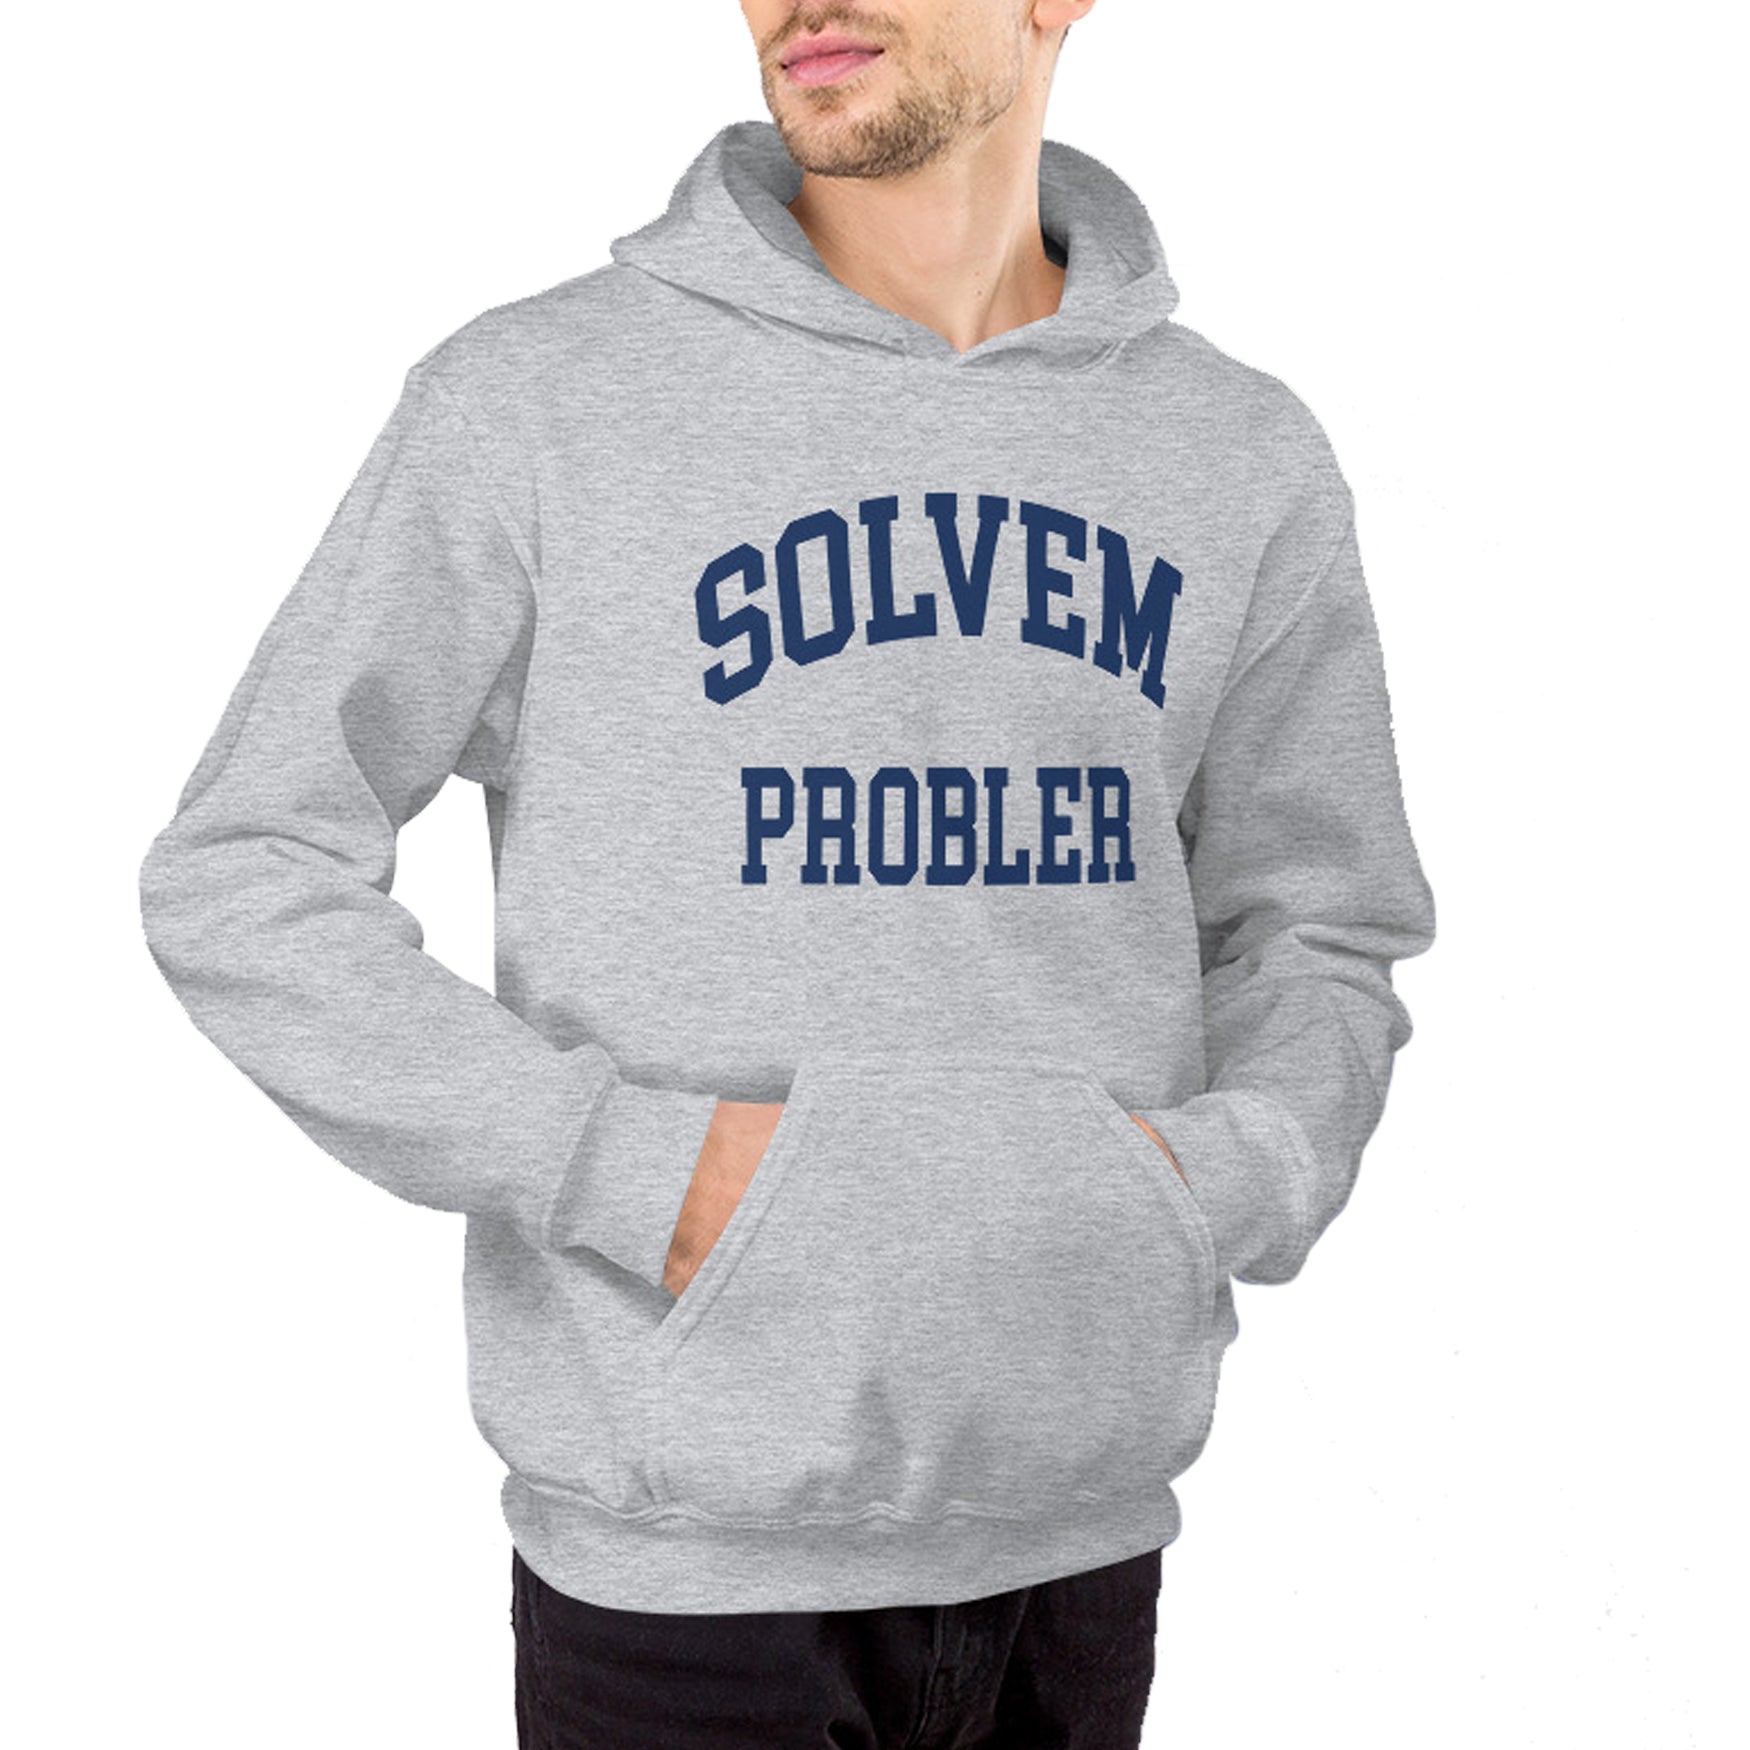 Solvem Probler hoodie